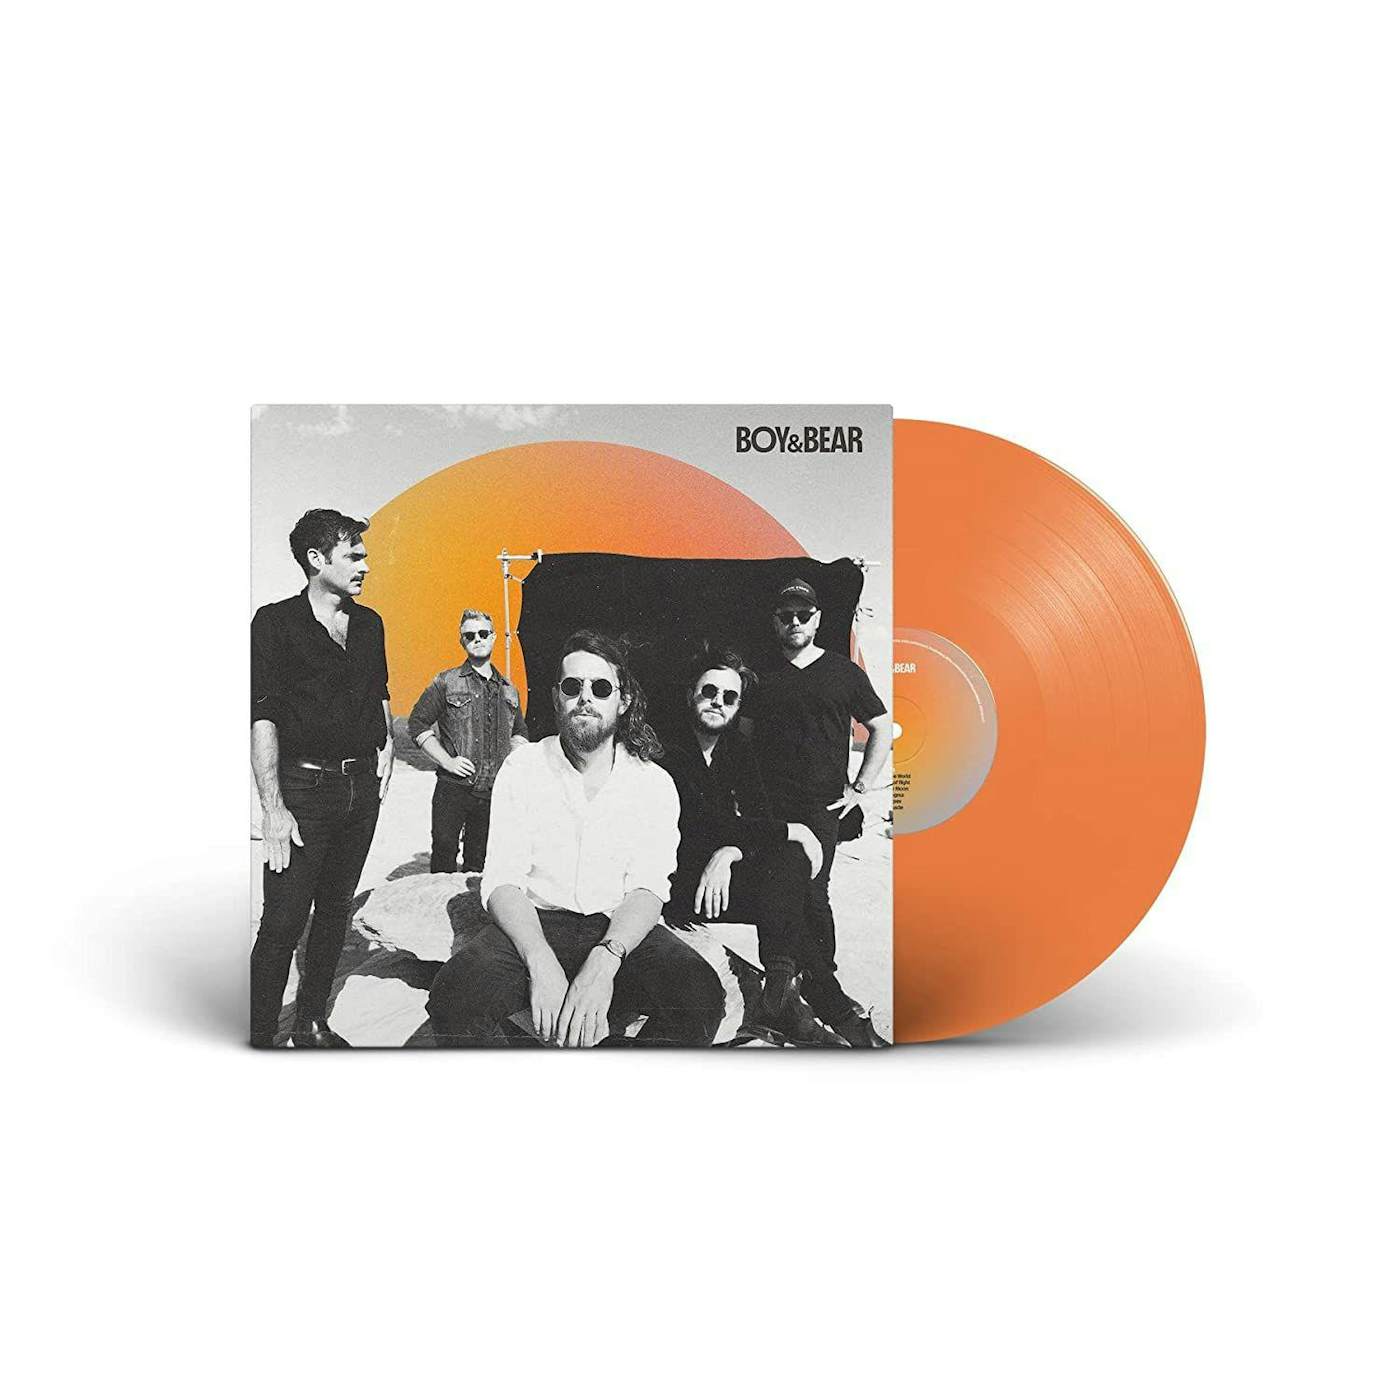  Boy & Bear (Orange) Vinyl Record